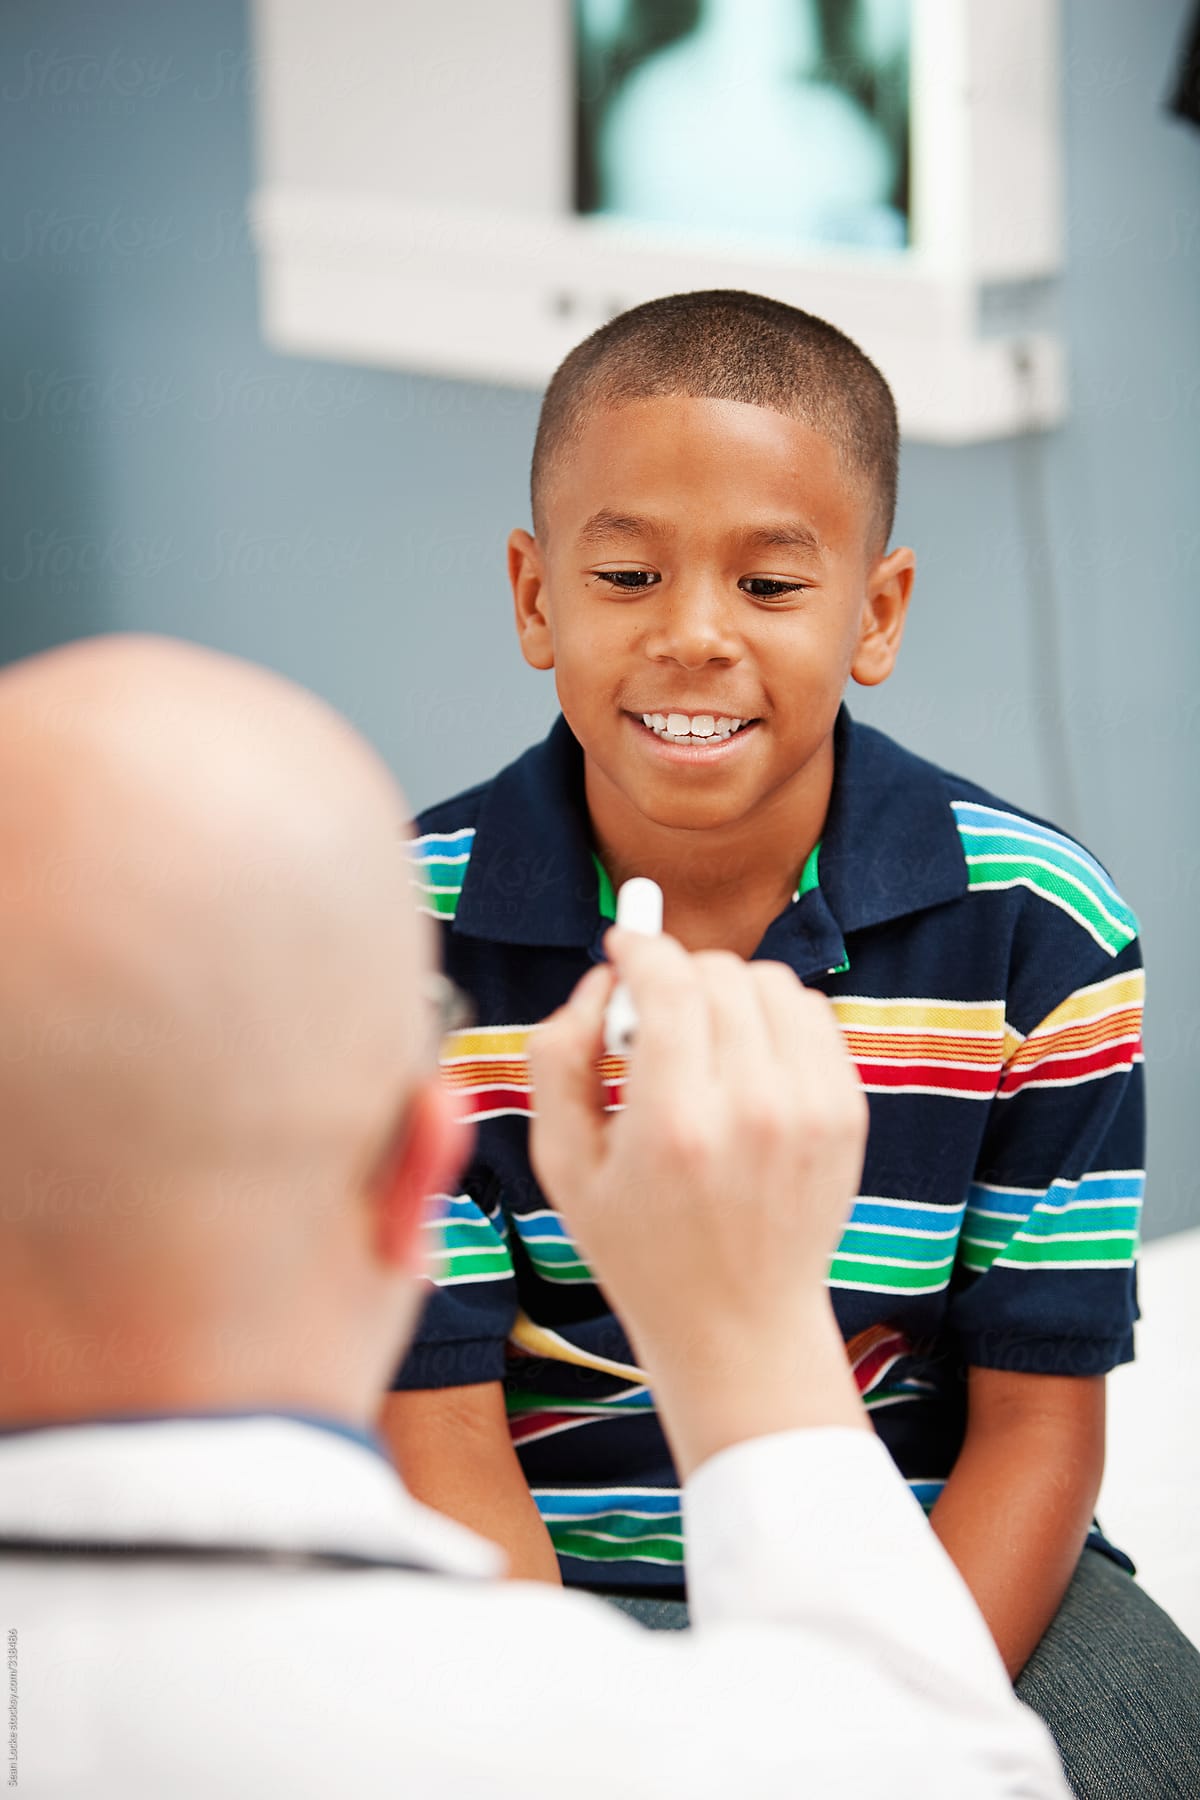 Pediatrician: Youth Undergoes Eye Testing from Pediatrician